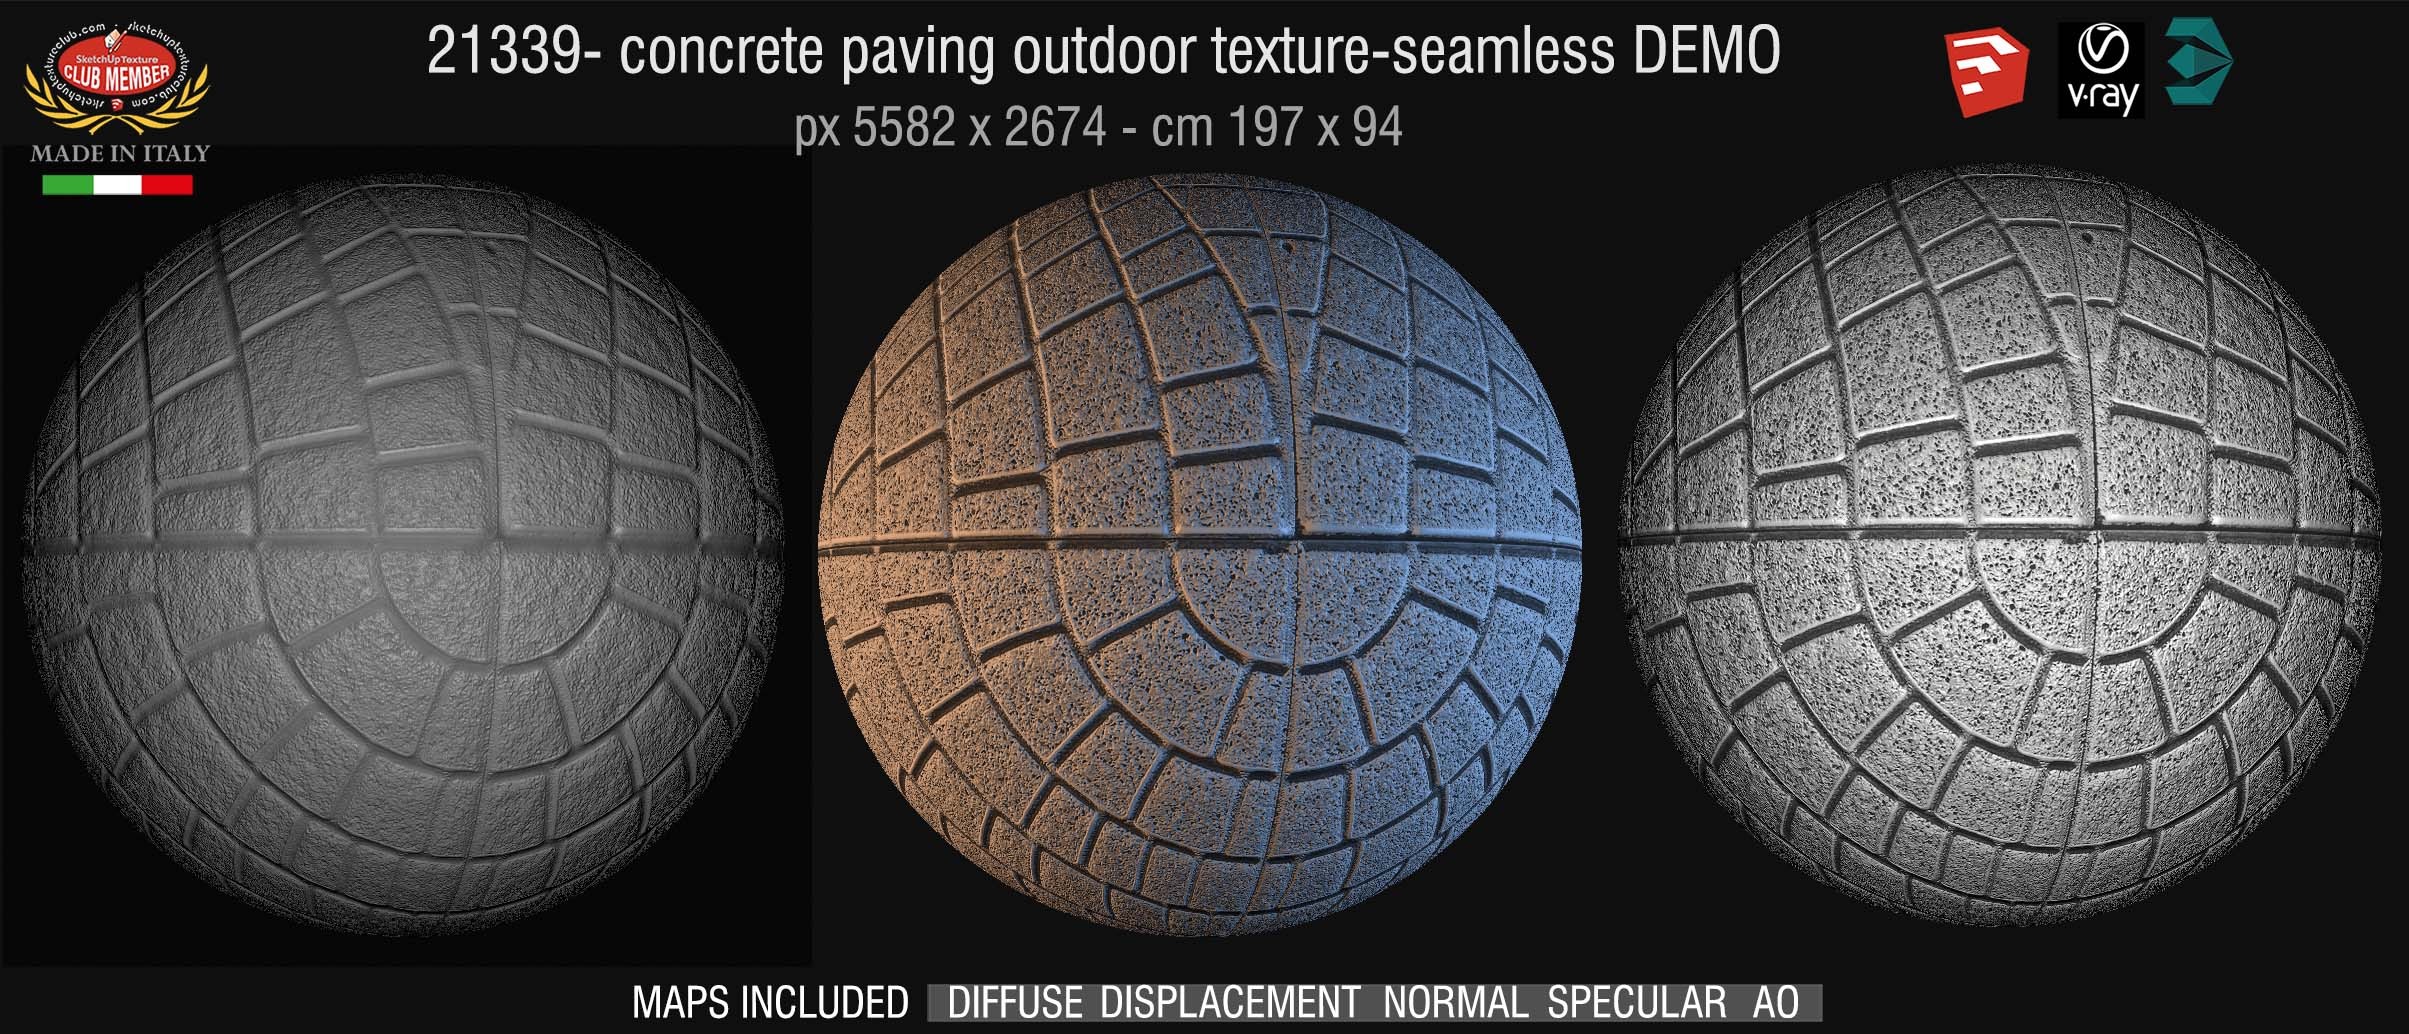 21339 HR concrete paving outdoor texture seamless + maps DEMO